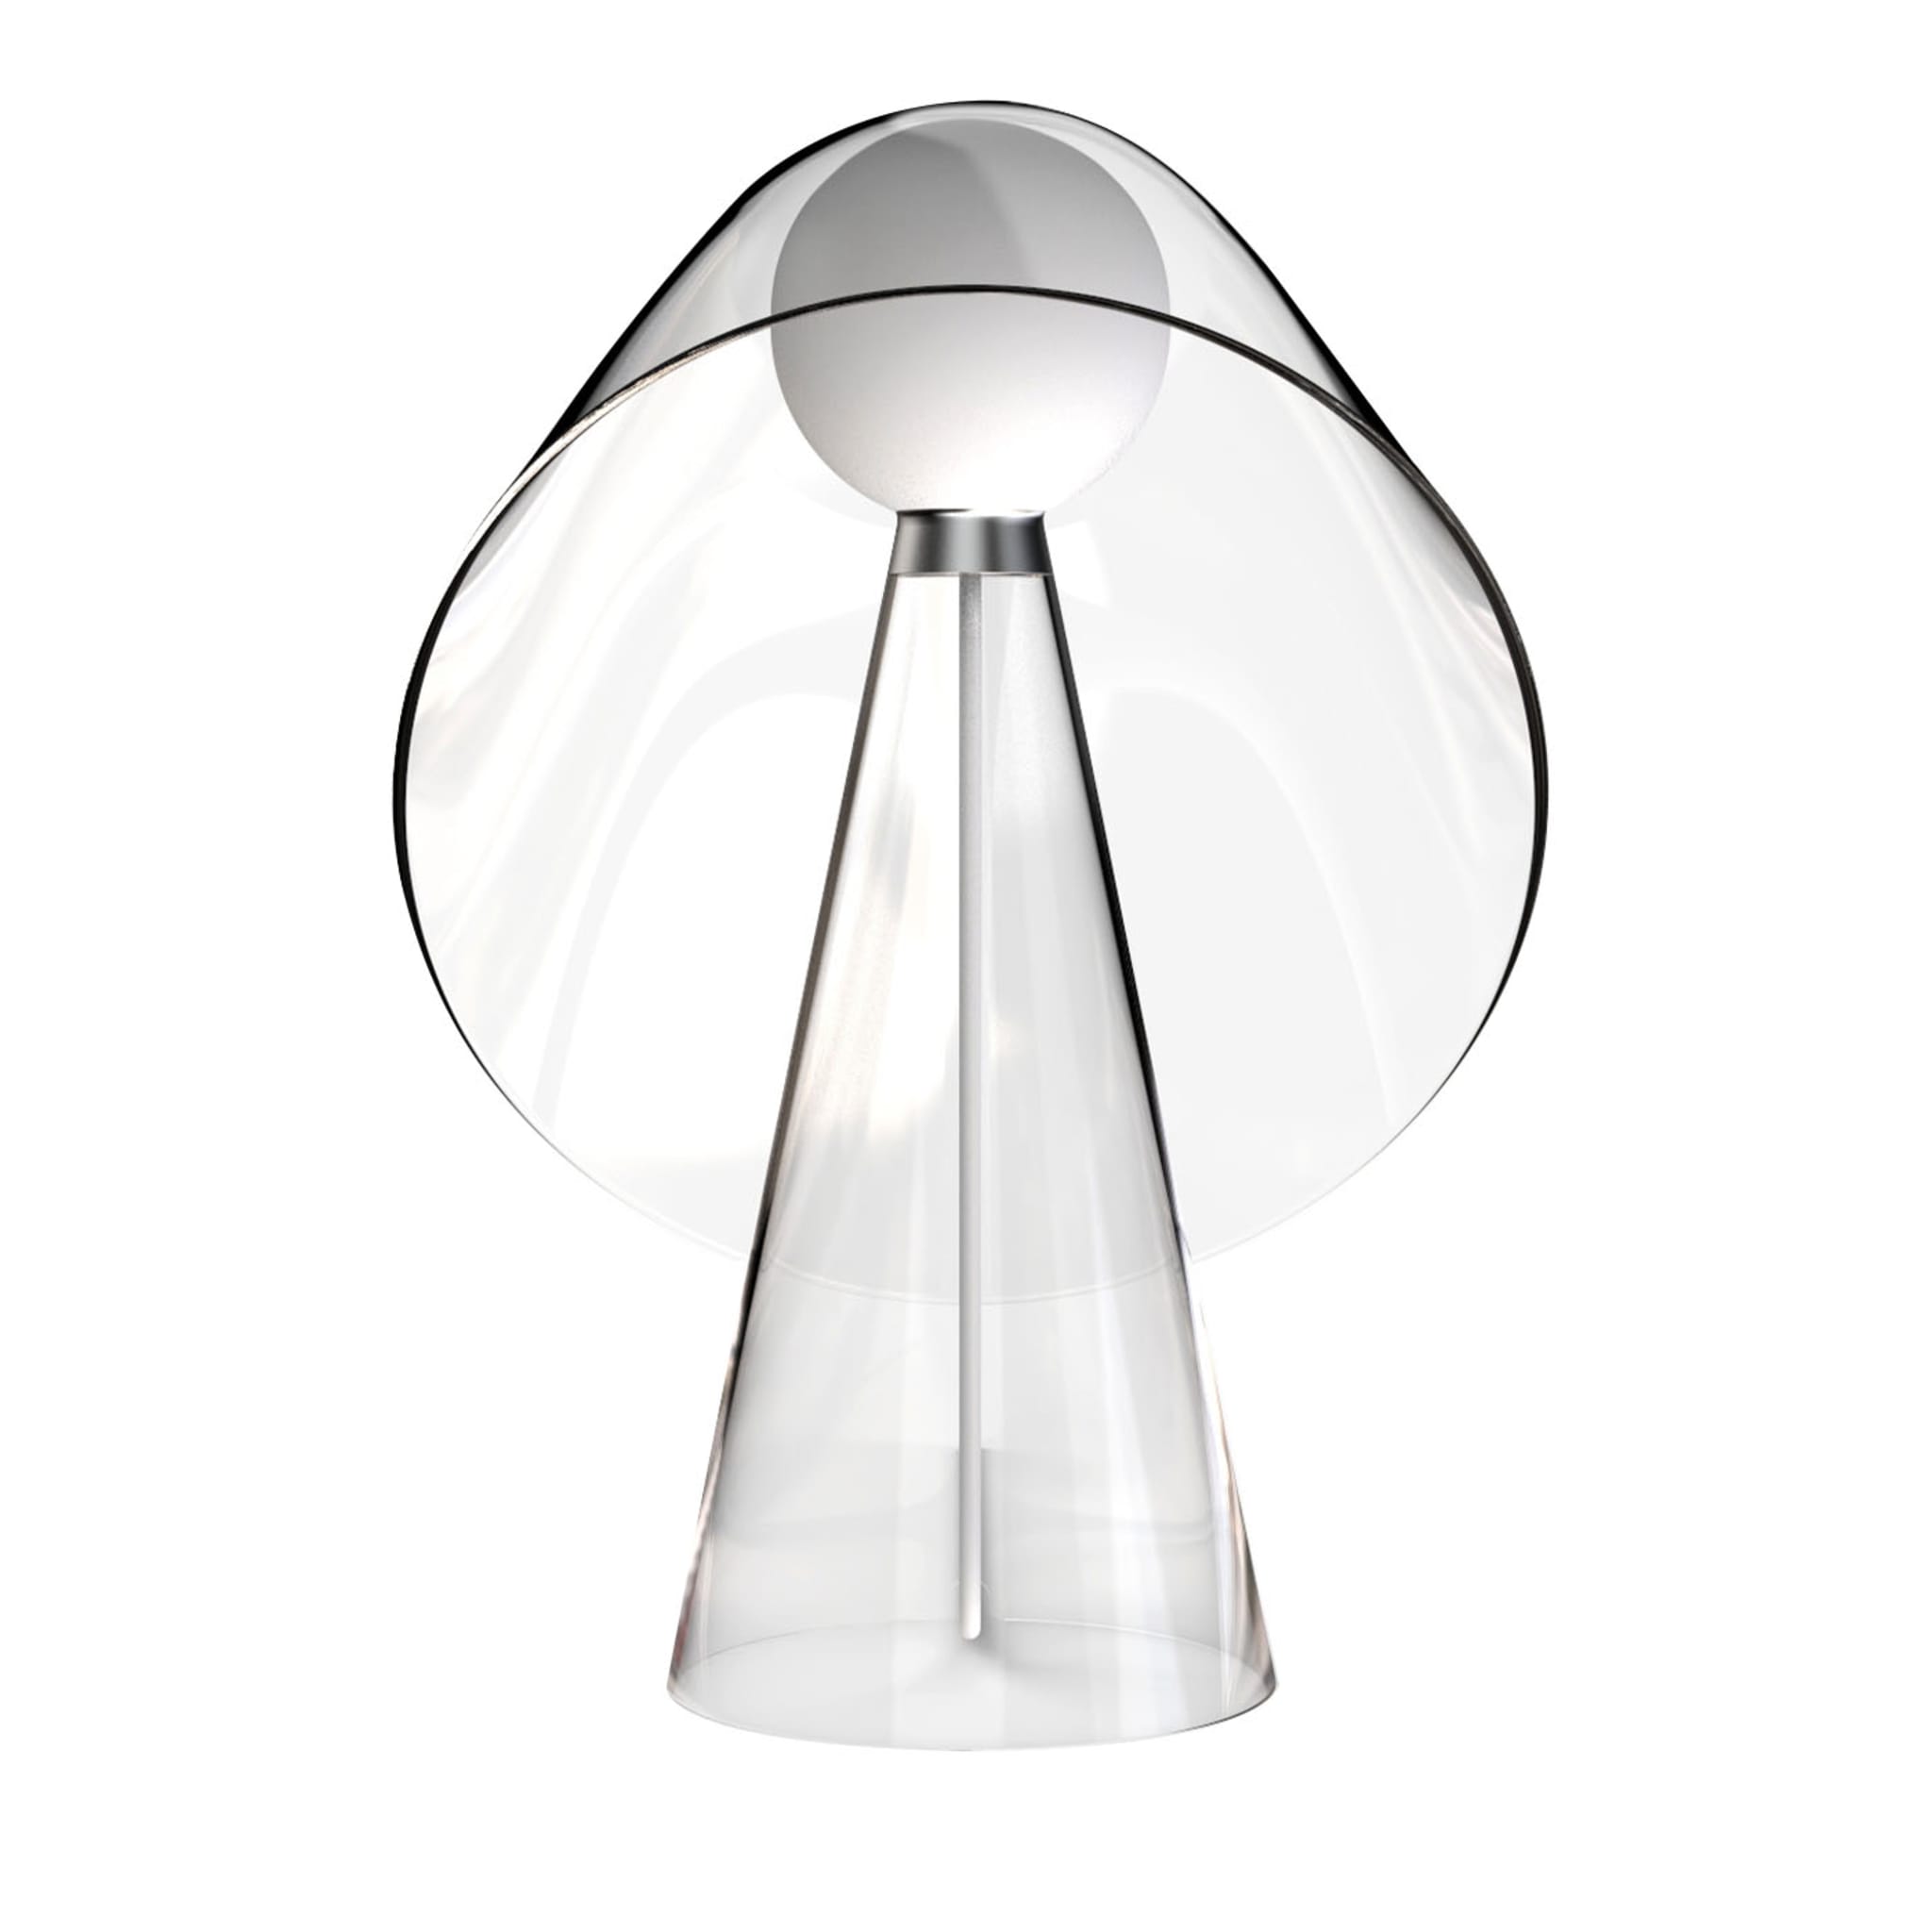 Mademoiselle Transparent Table Lamp by Quaglio Simonelli - Main view